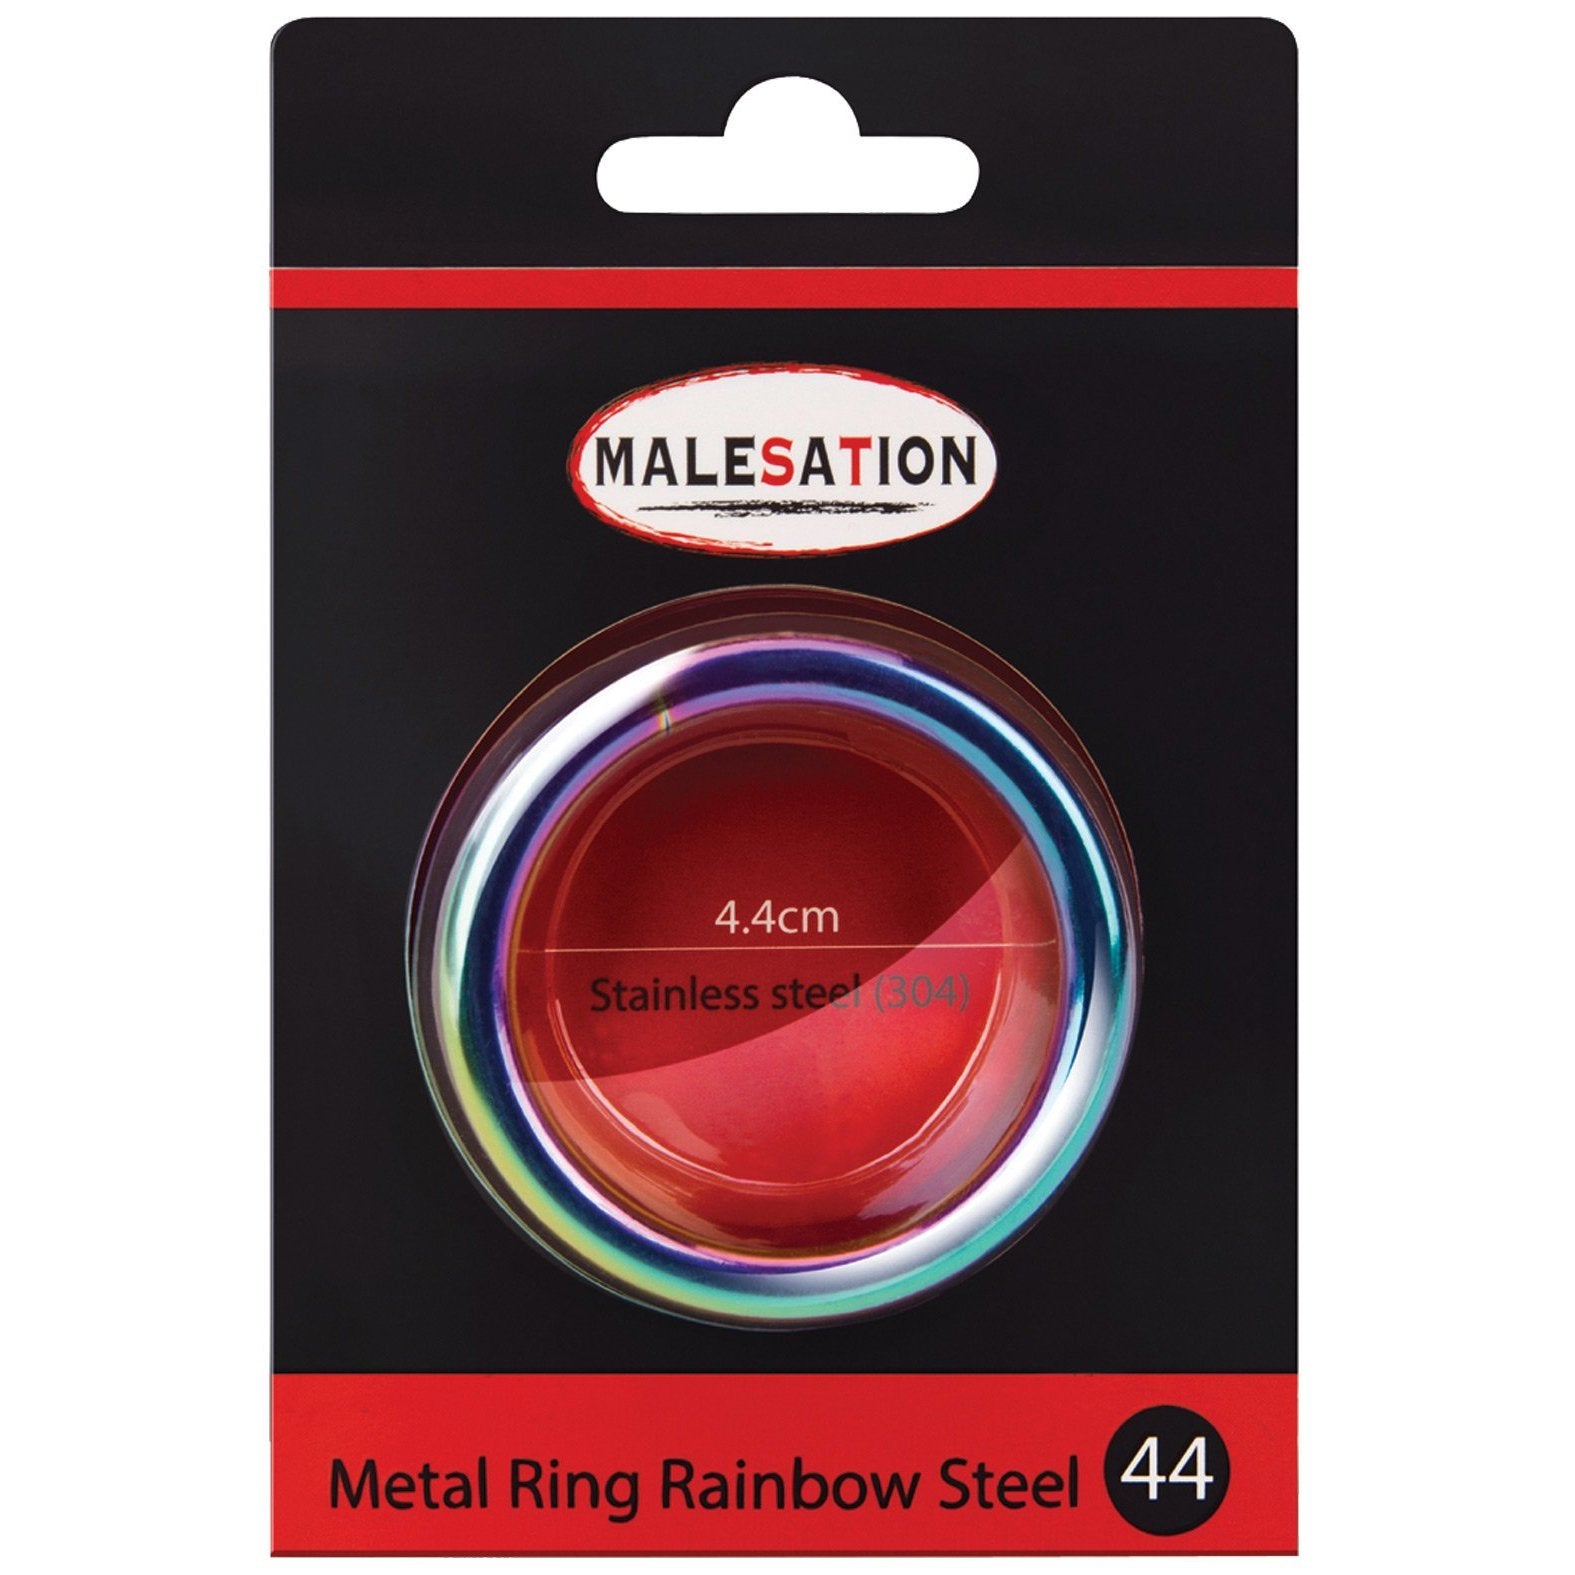 Malesation Nickel Free Stainless Steel Rainbow